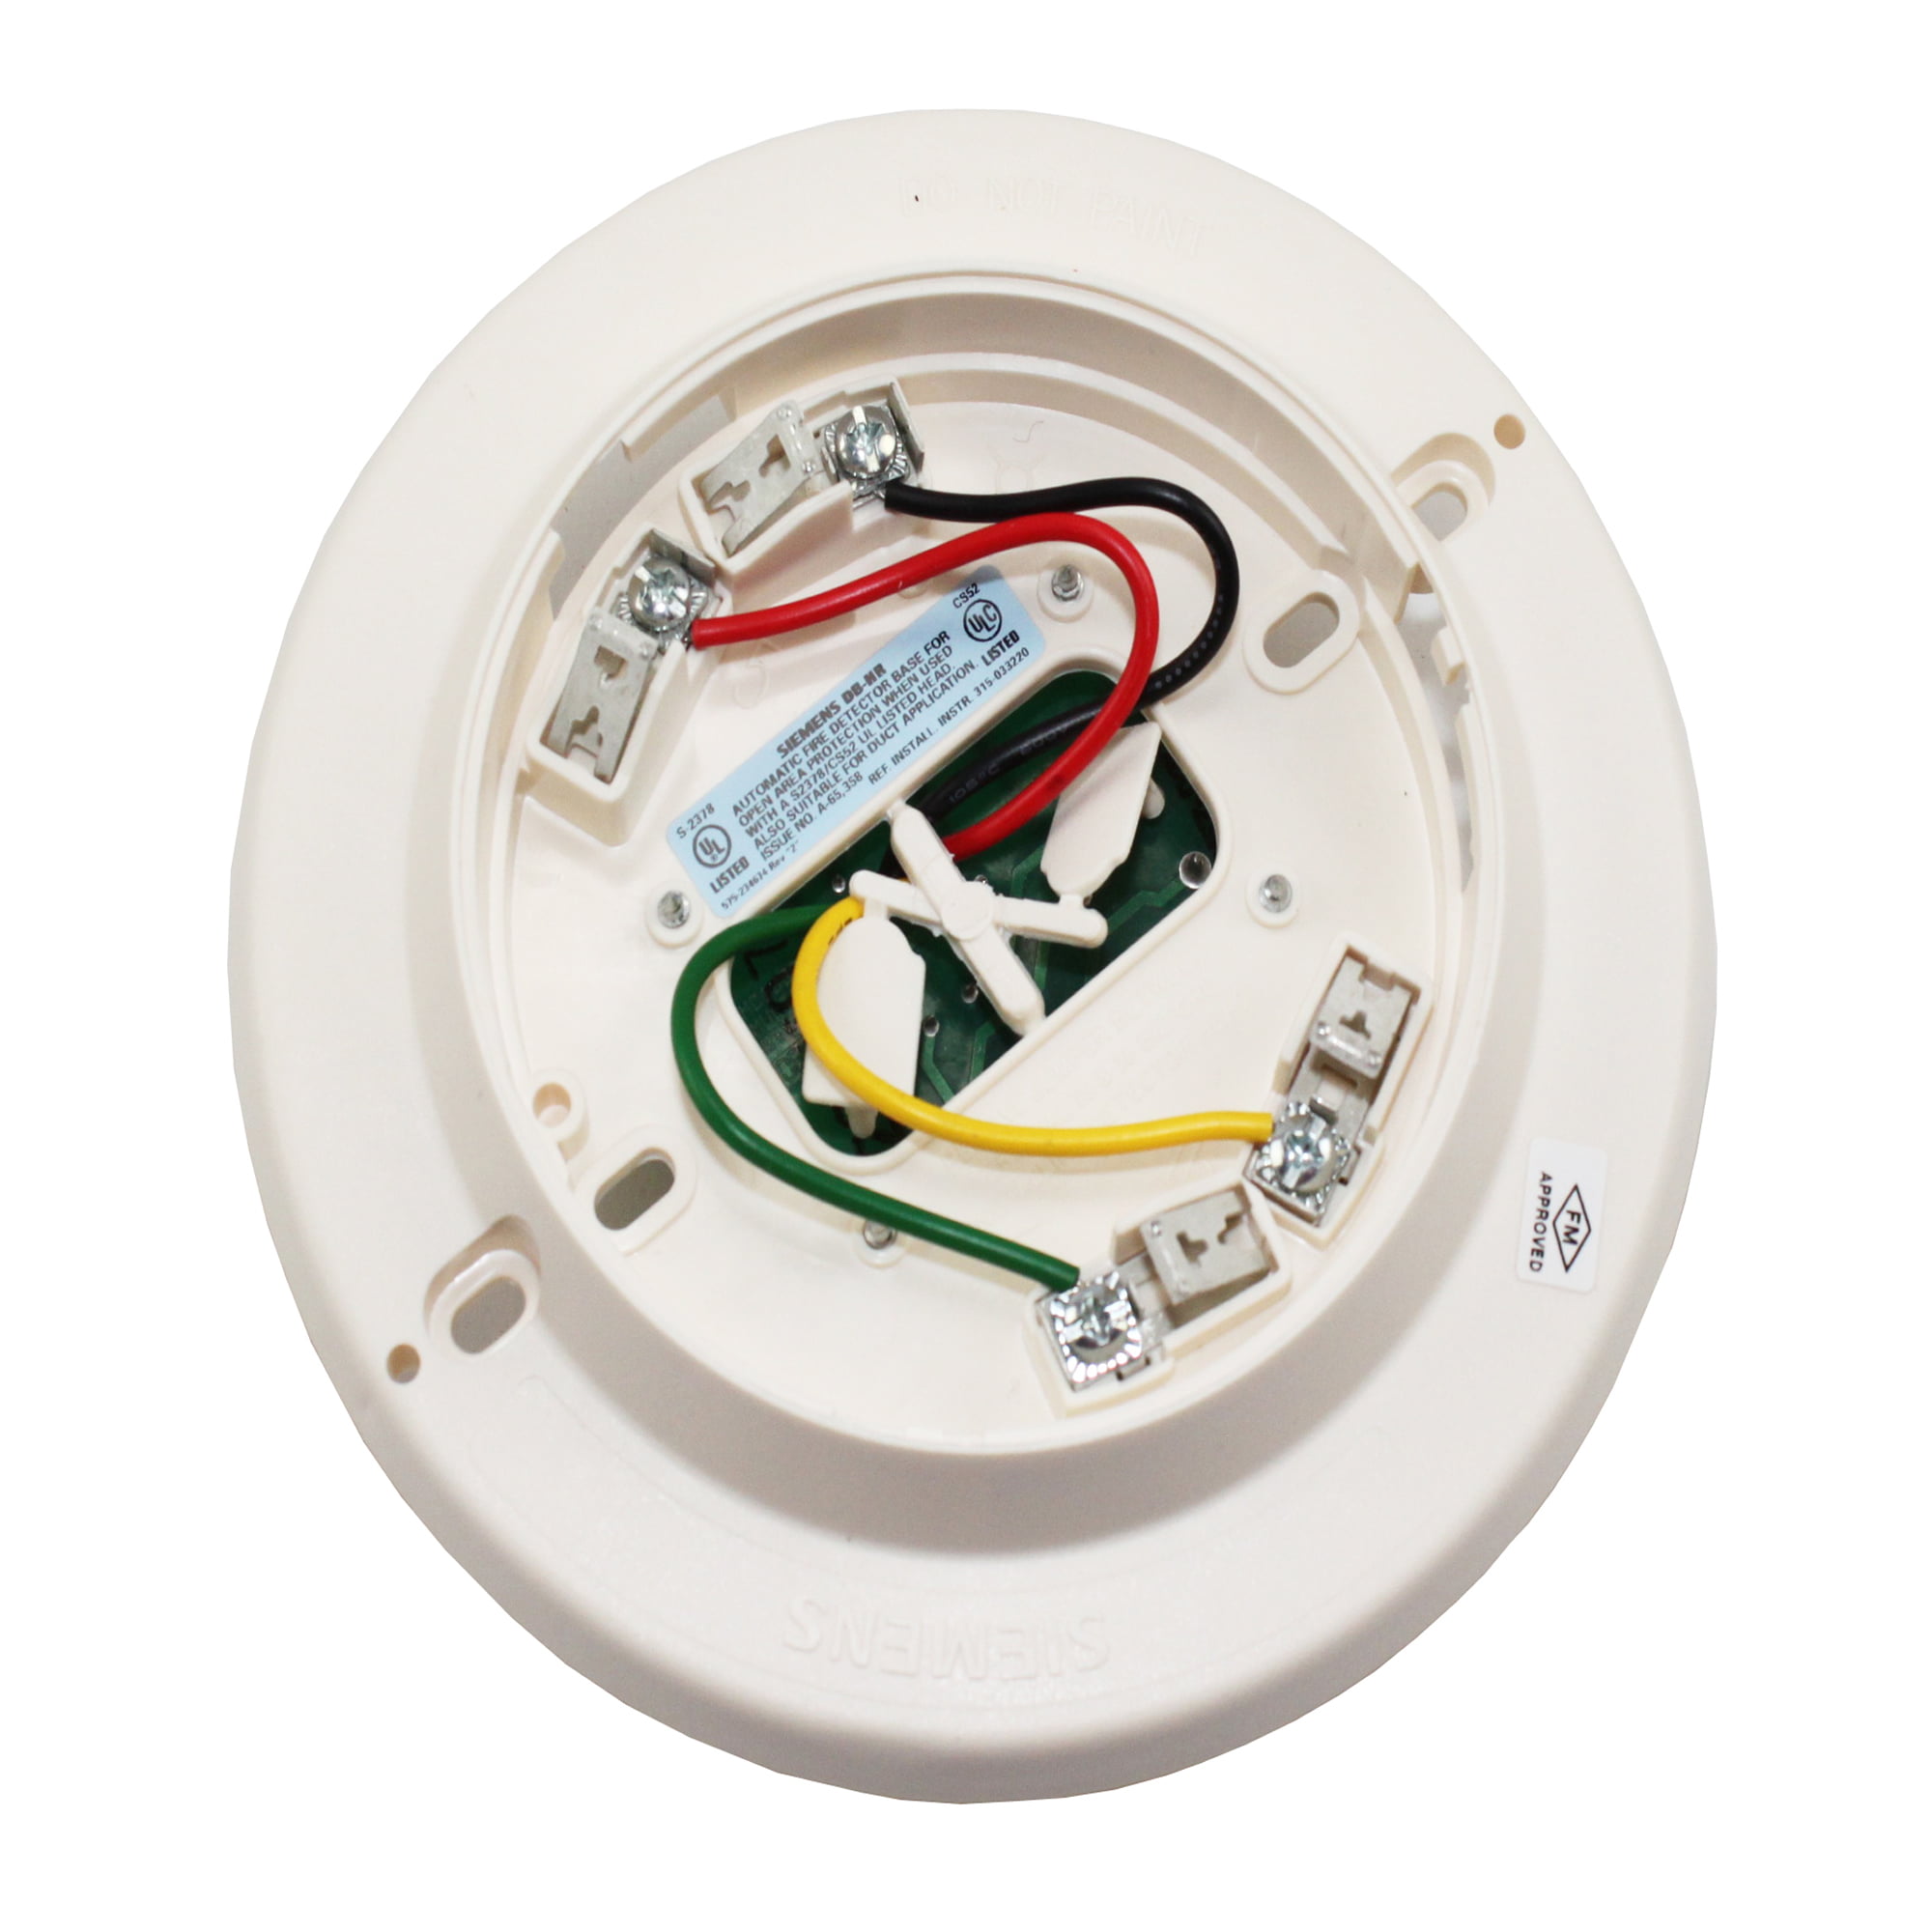 Siemens FDO221 Smoke Detector Fire Alarm OPTICAL ELECTRONIC Head 